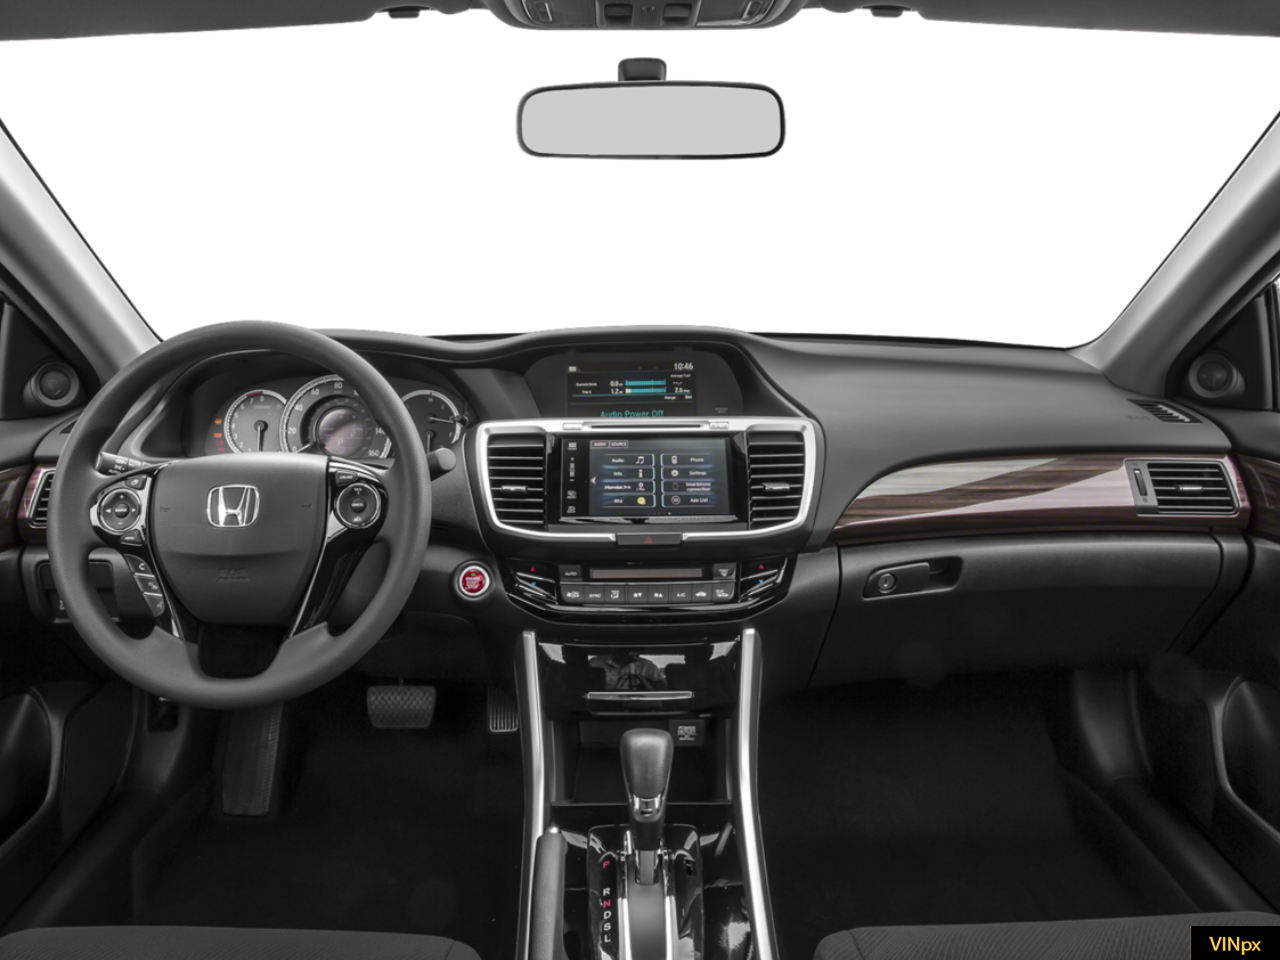 2016 Honda Accord EX